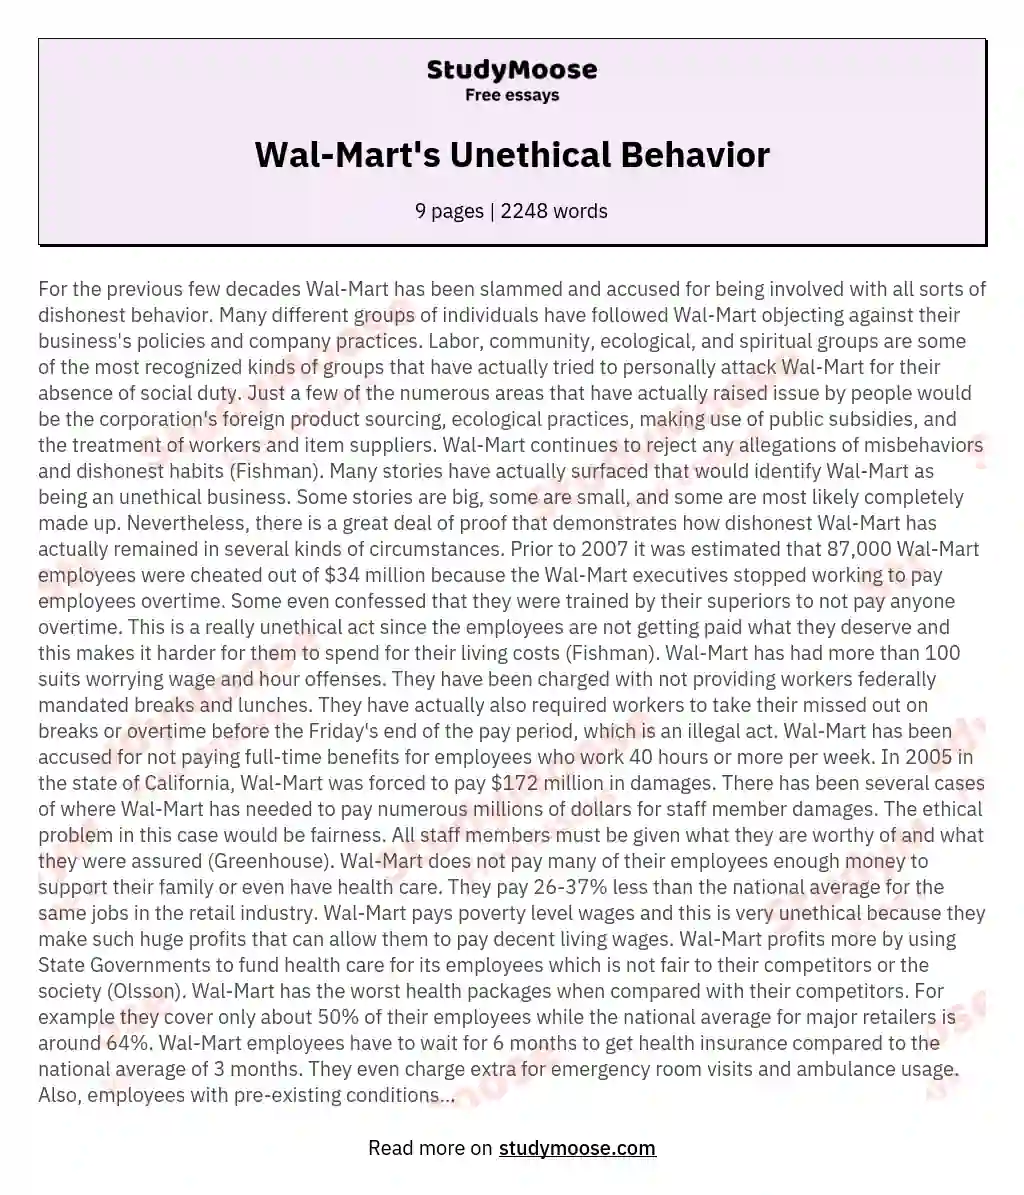 Wal-Mart's Unethical Behavior essay